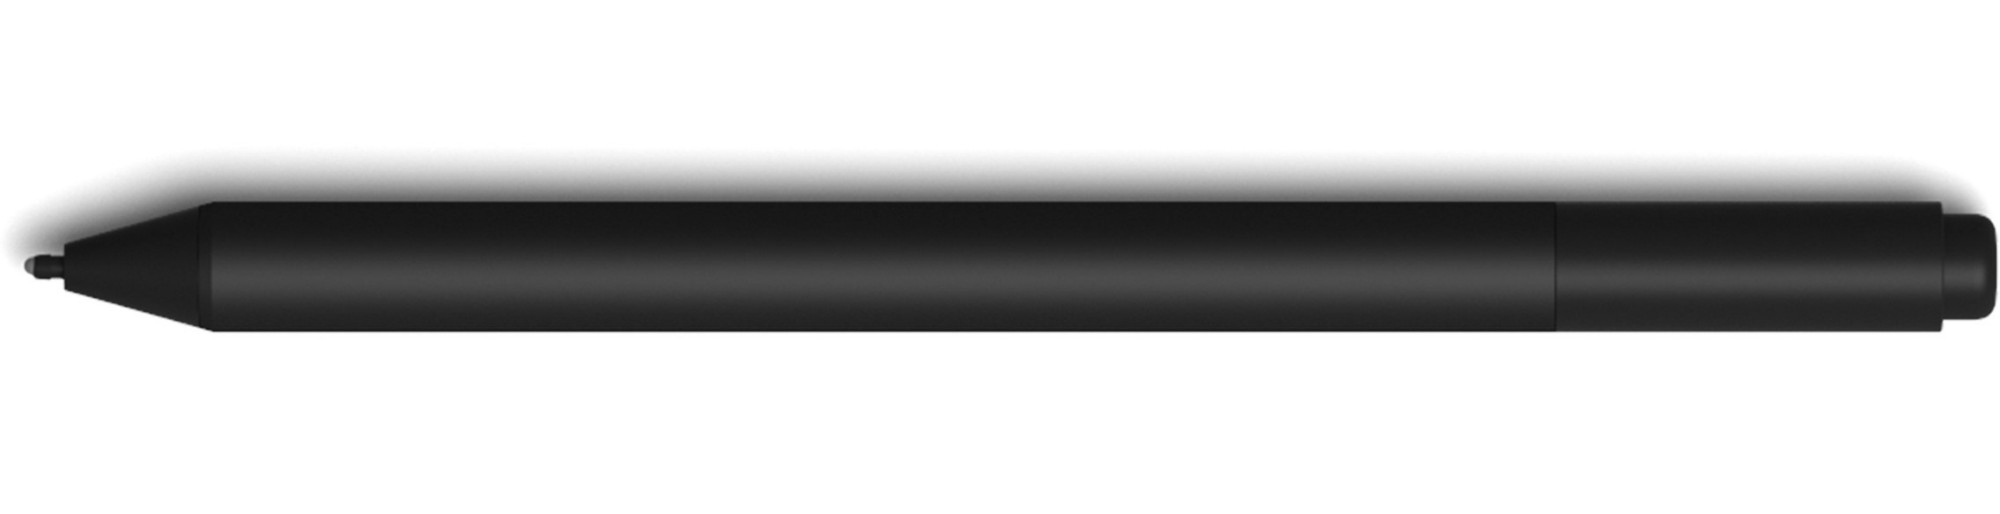 Microsoft Surface Pen stylus pen 20 g Black